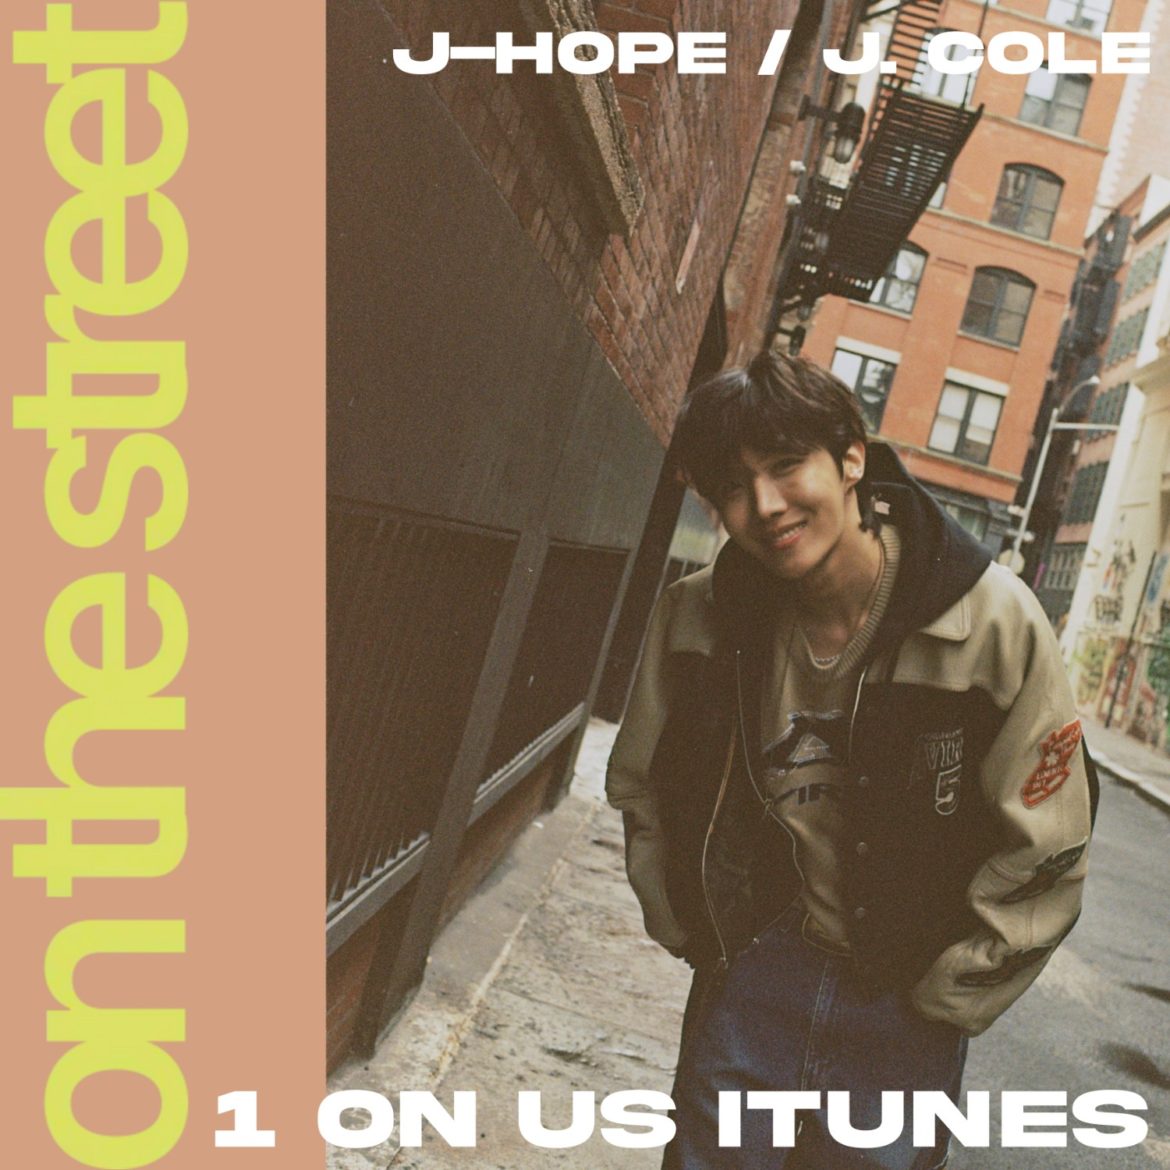 j-hope ‘on the street (with J. Cole)’ ขึ้นที่ 1 iTunes US ได้สำเร็จ 🎉